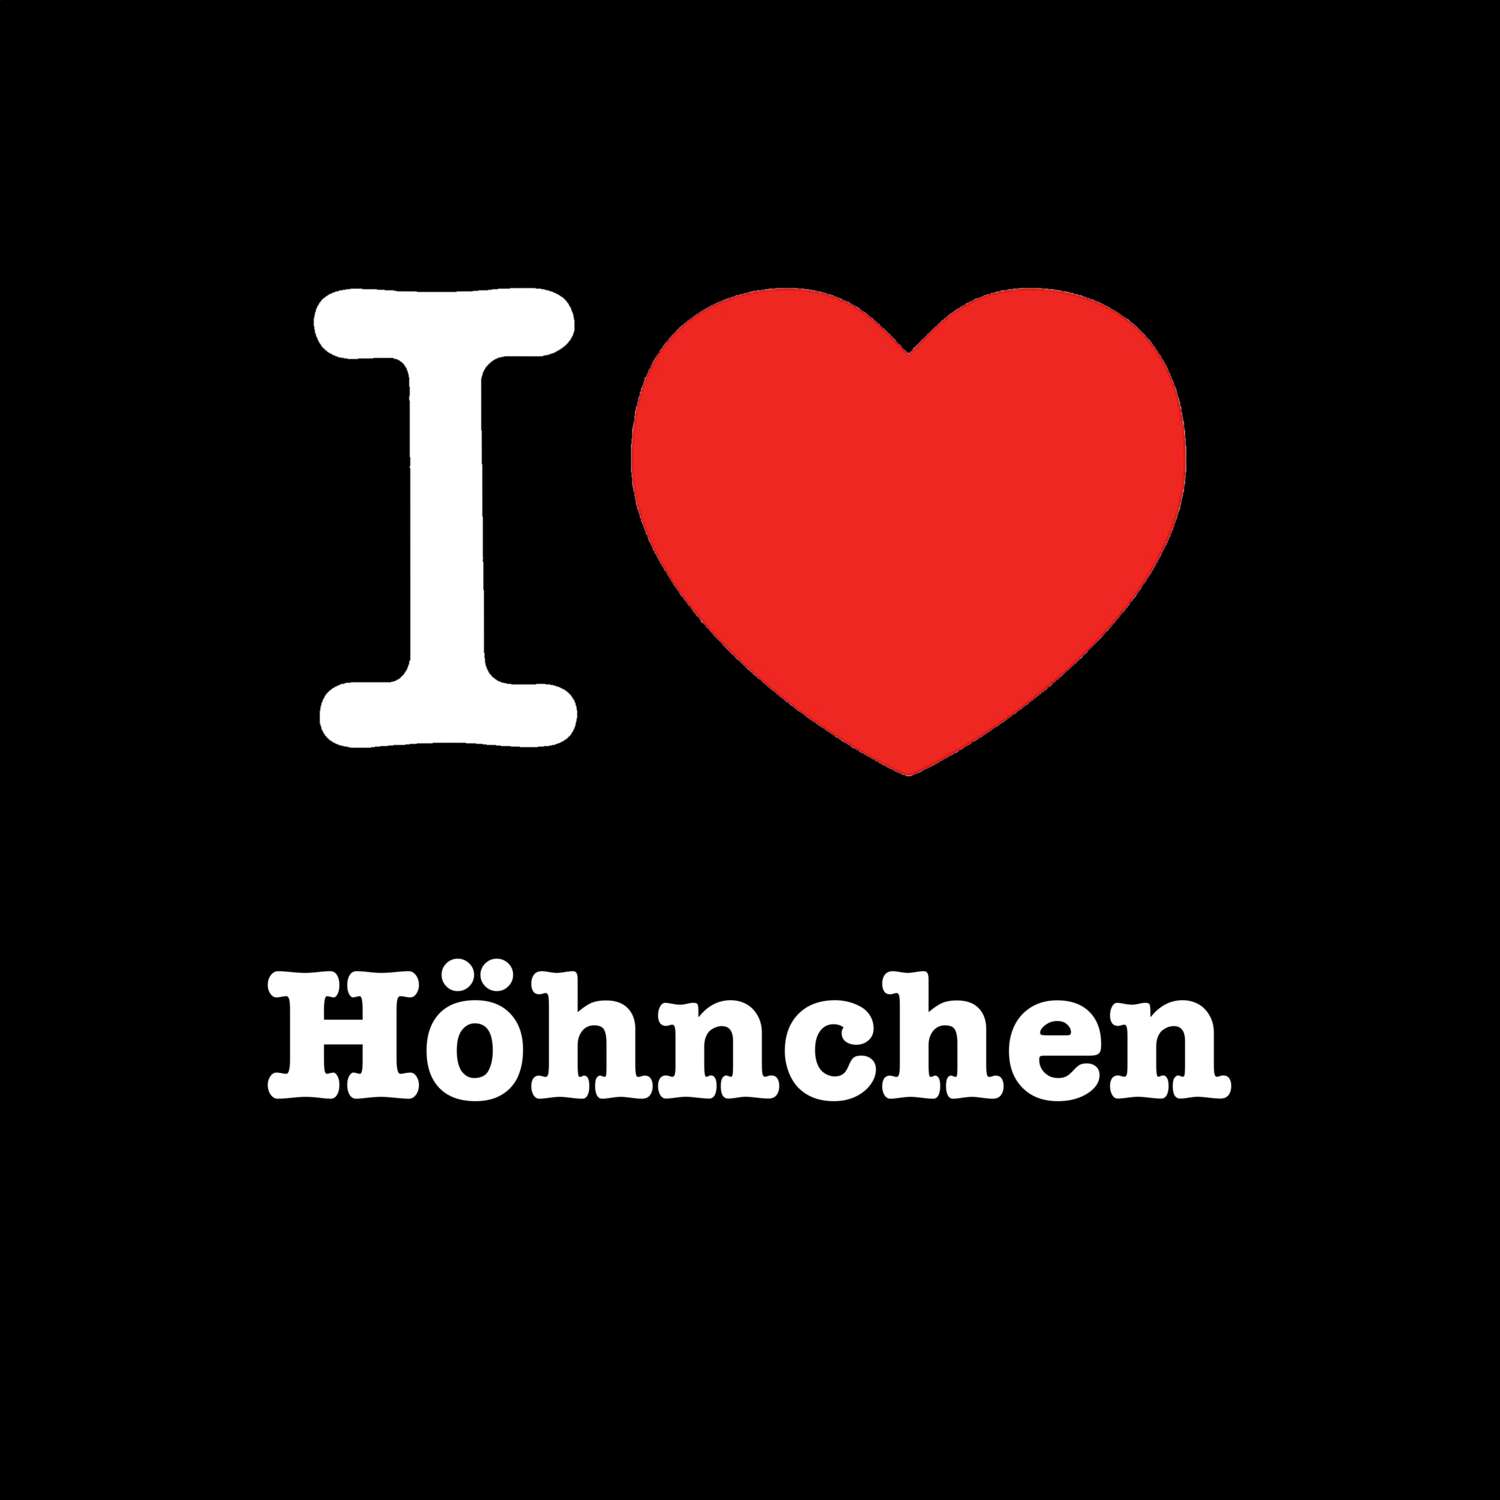 Höhnchen T-Shirt »I love«